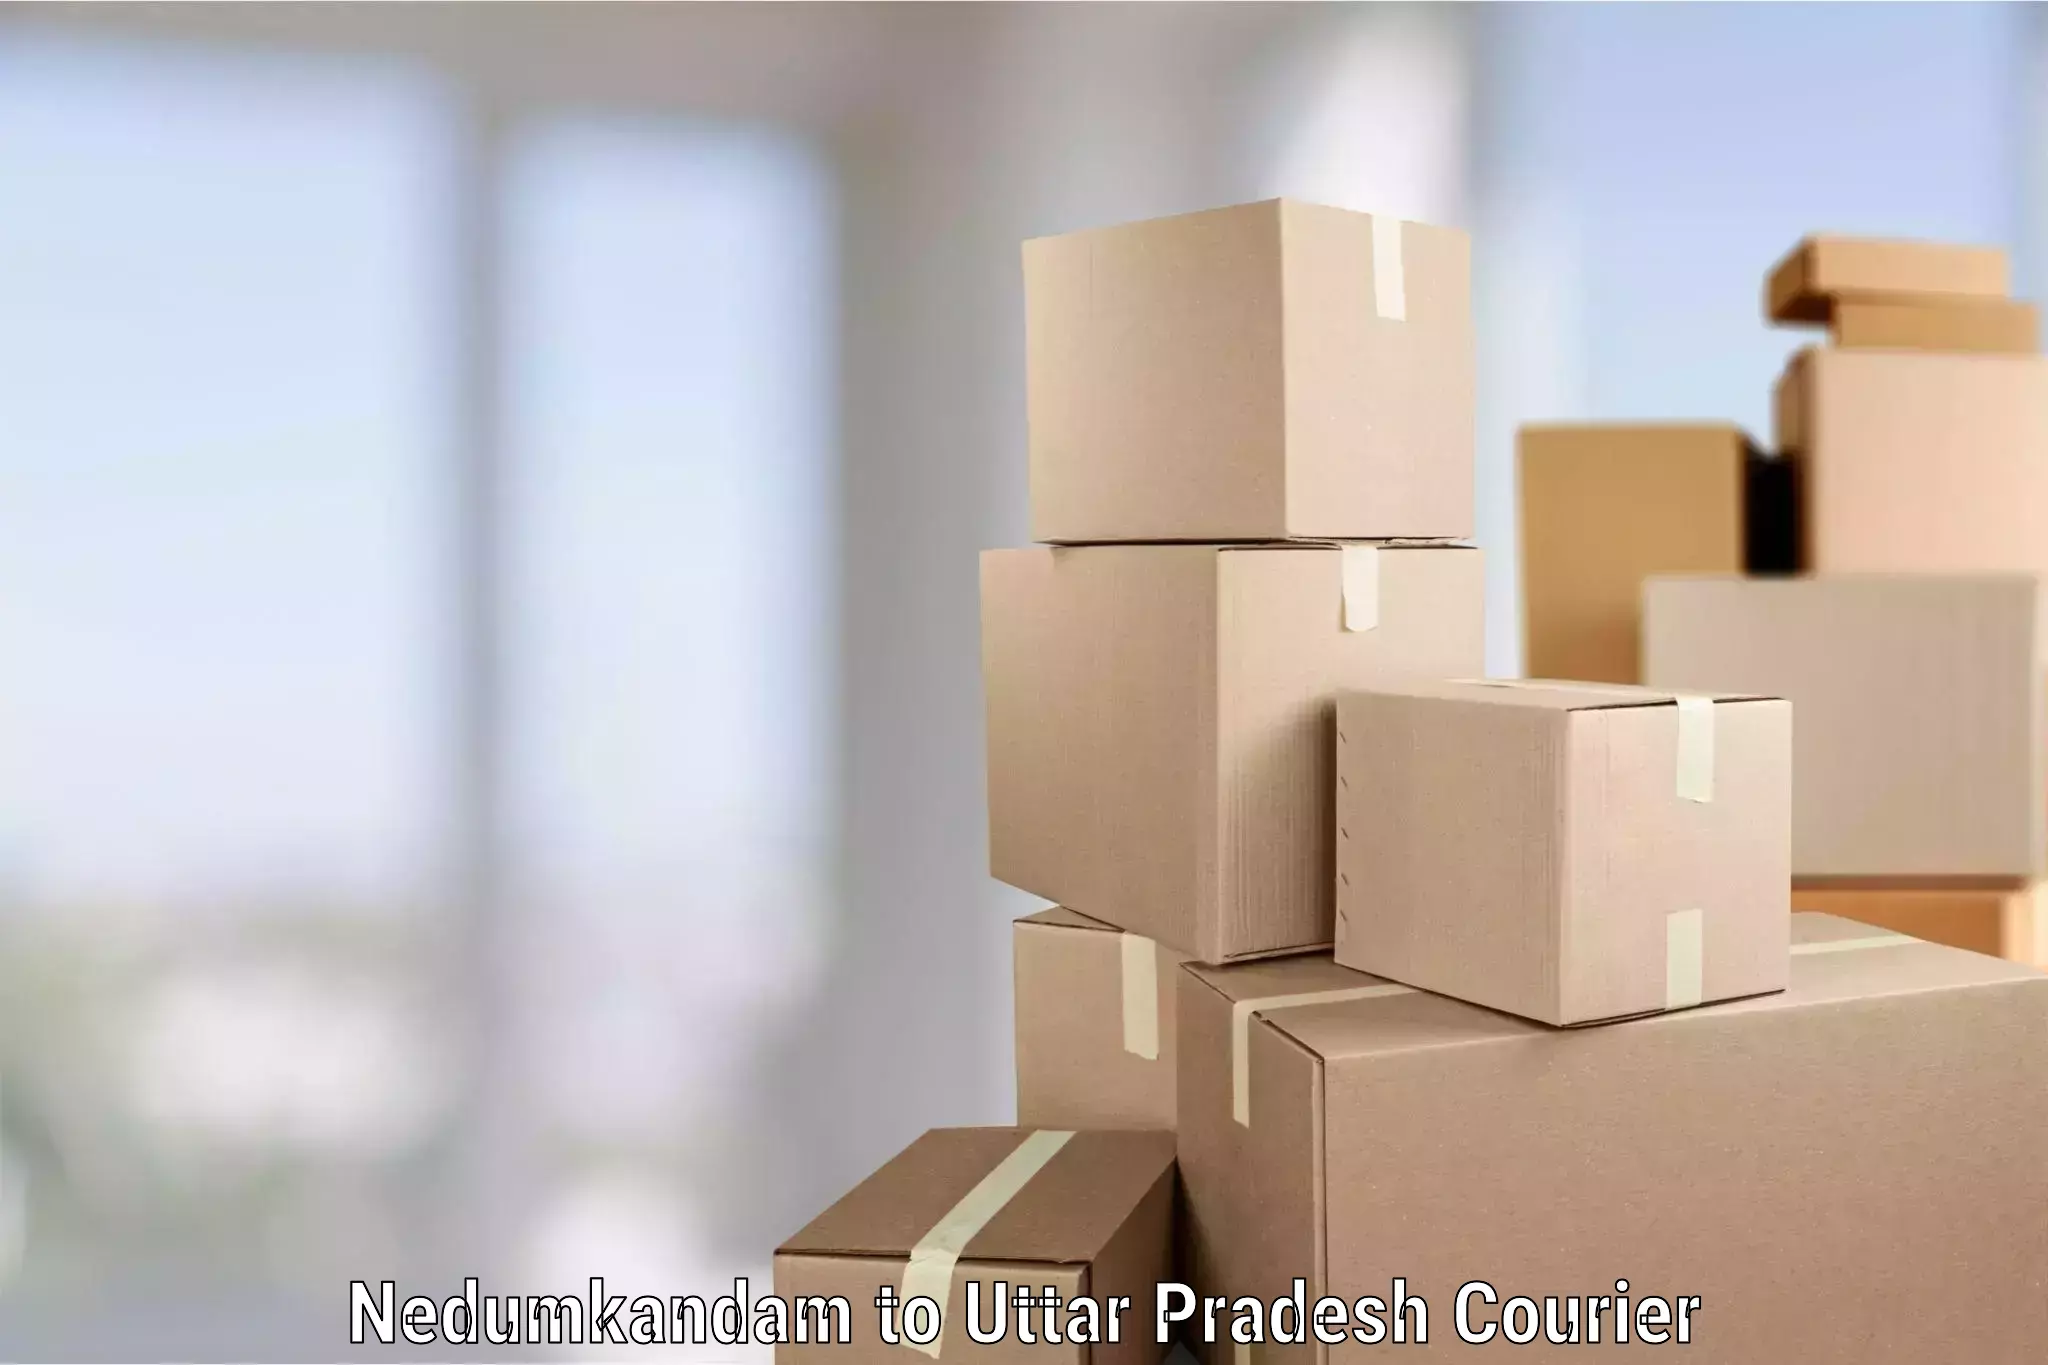 Professional moving company Nedumkandam to Uttar Pradesh